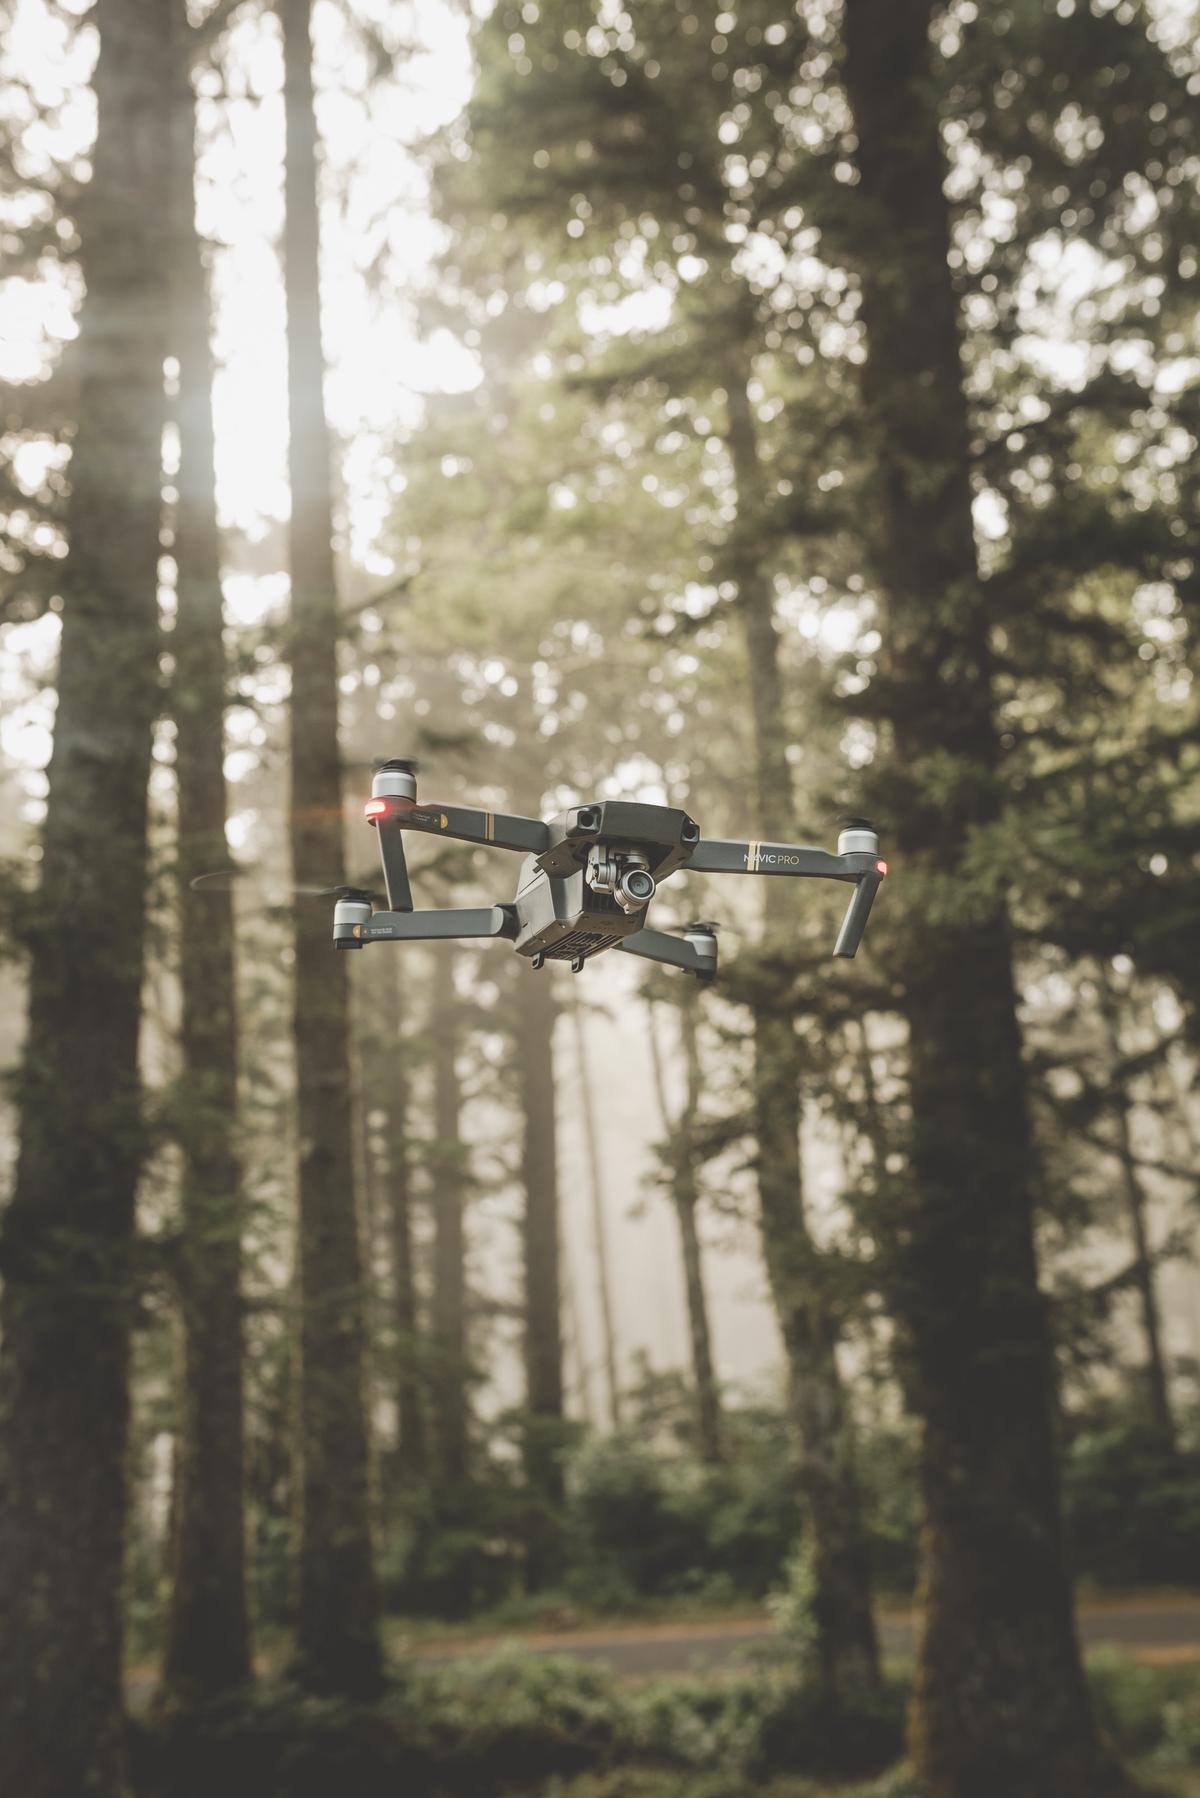 An image showing the DJI Mavic Mini drone in flight over a scenic landscape